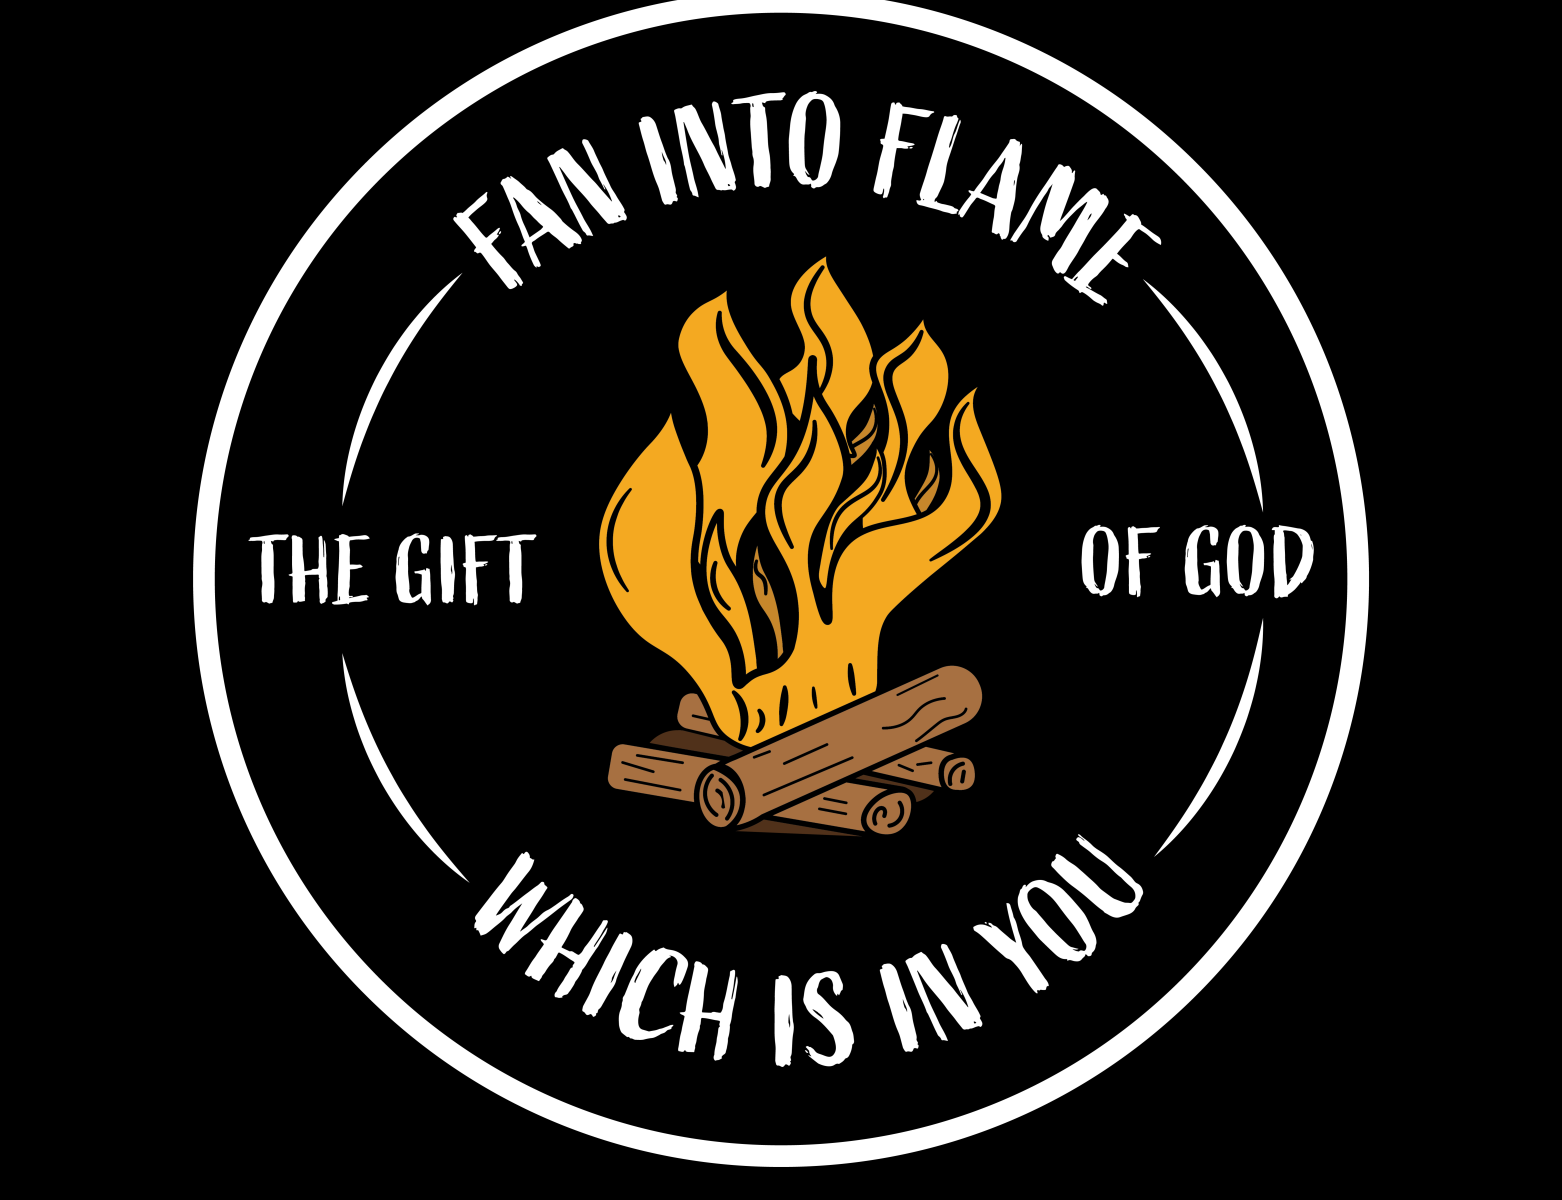 stilhed bekymring Ingen Fan into Flame the Gift of God by Dakota McCrary on Dribbble